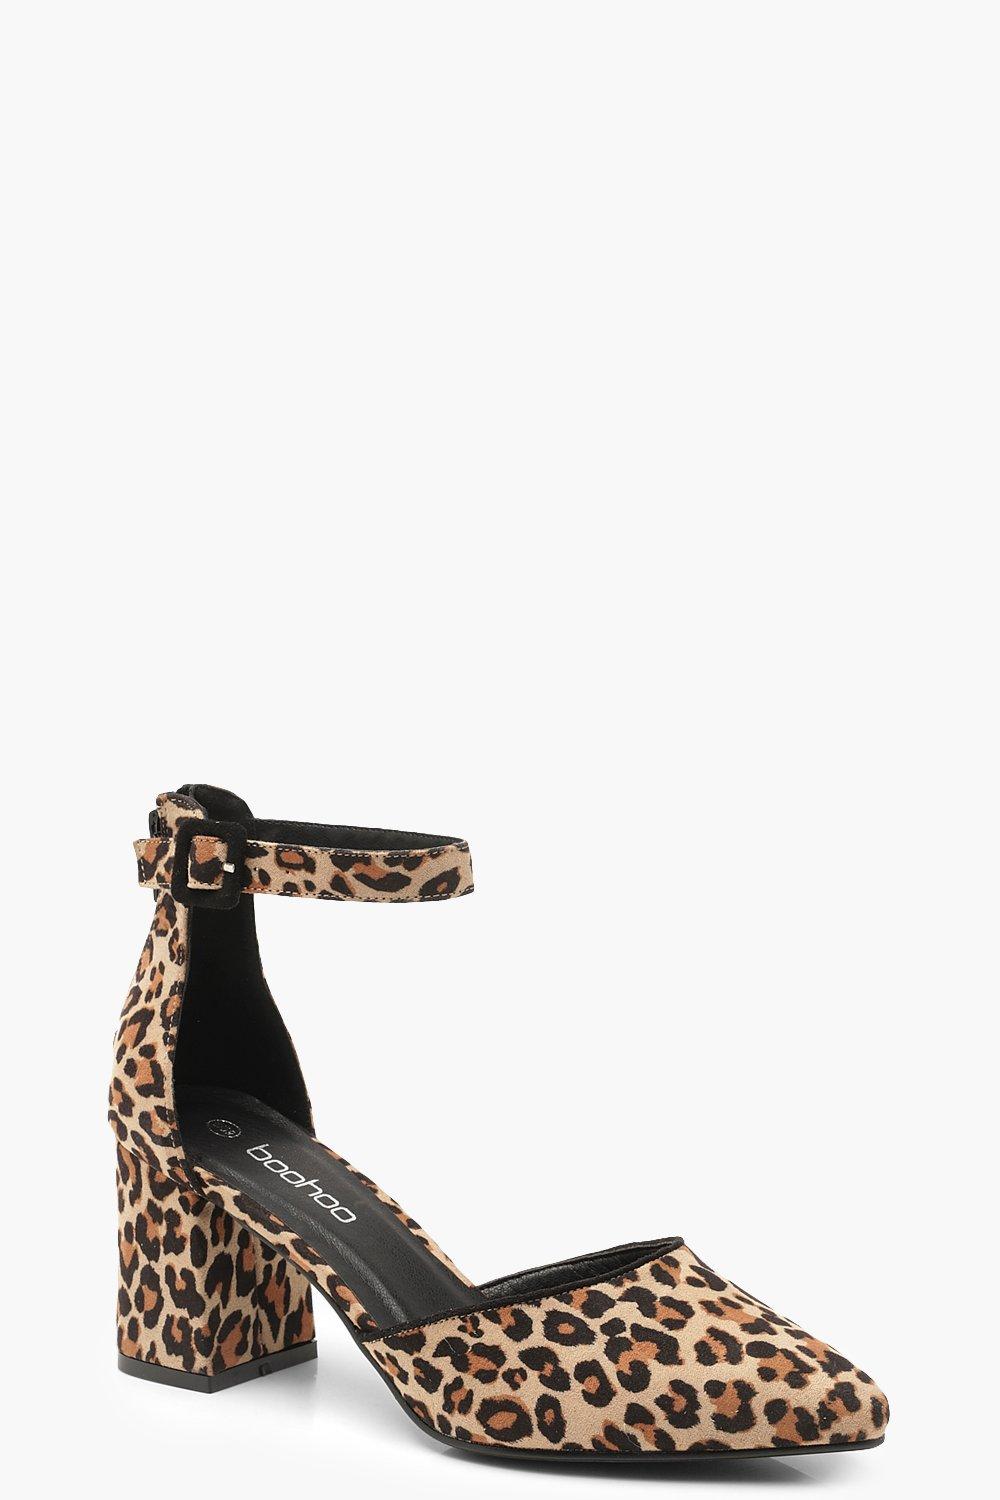 animal print shoes block heel